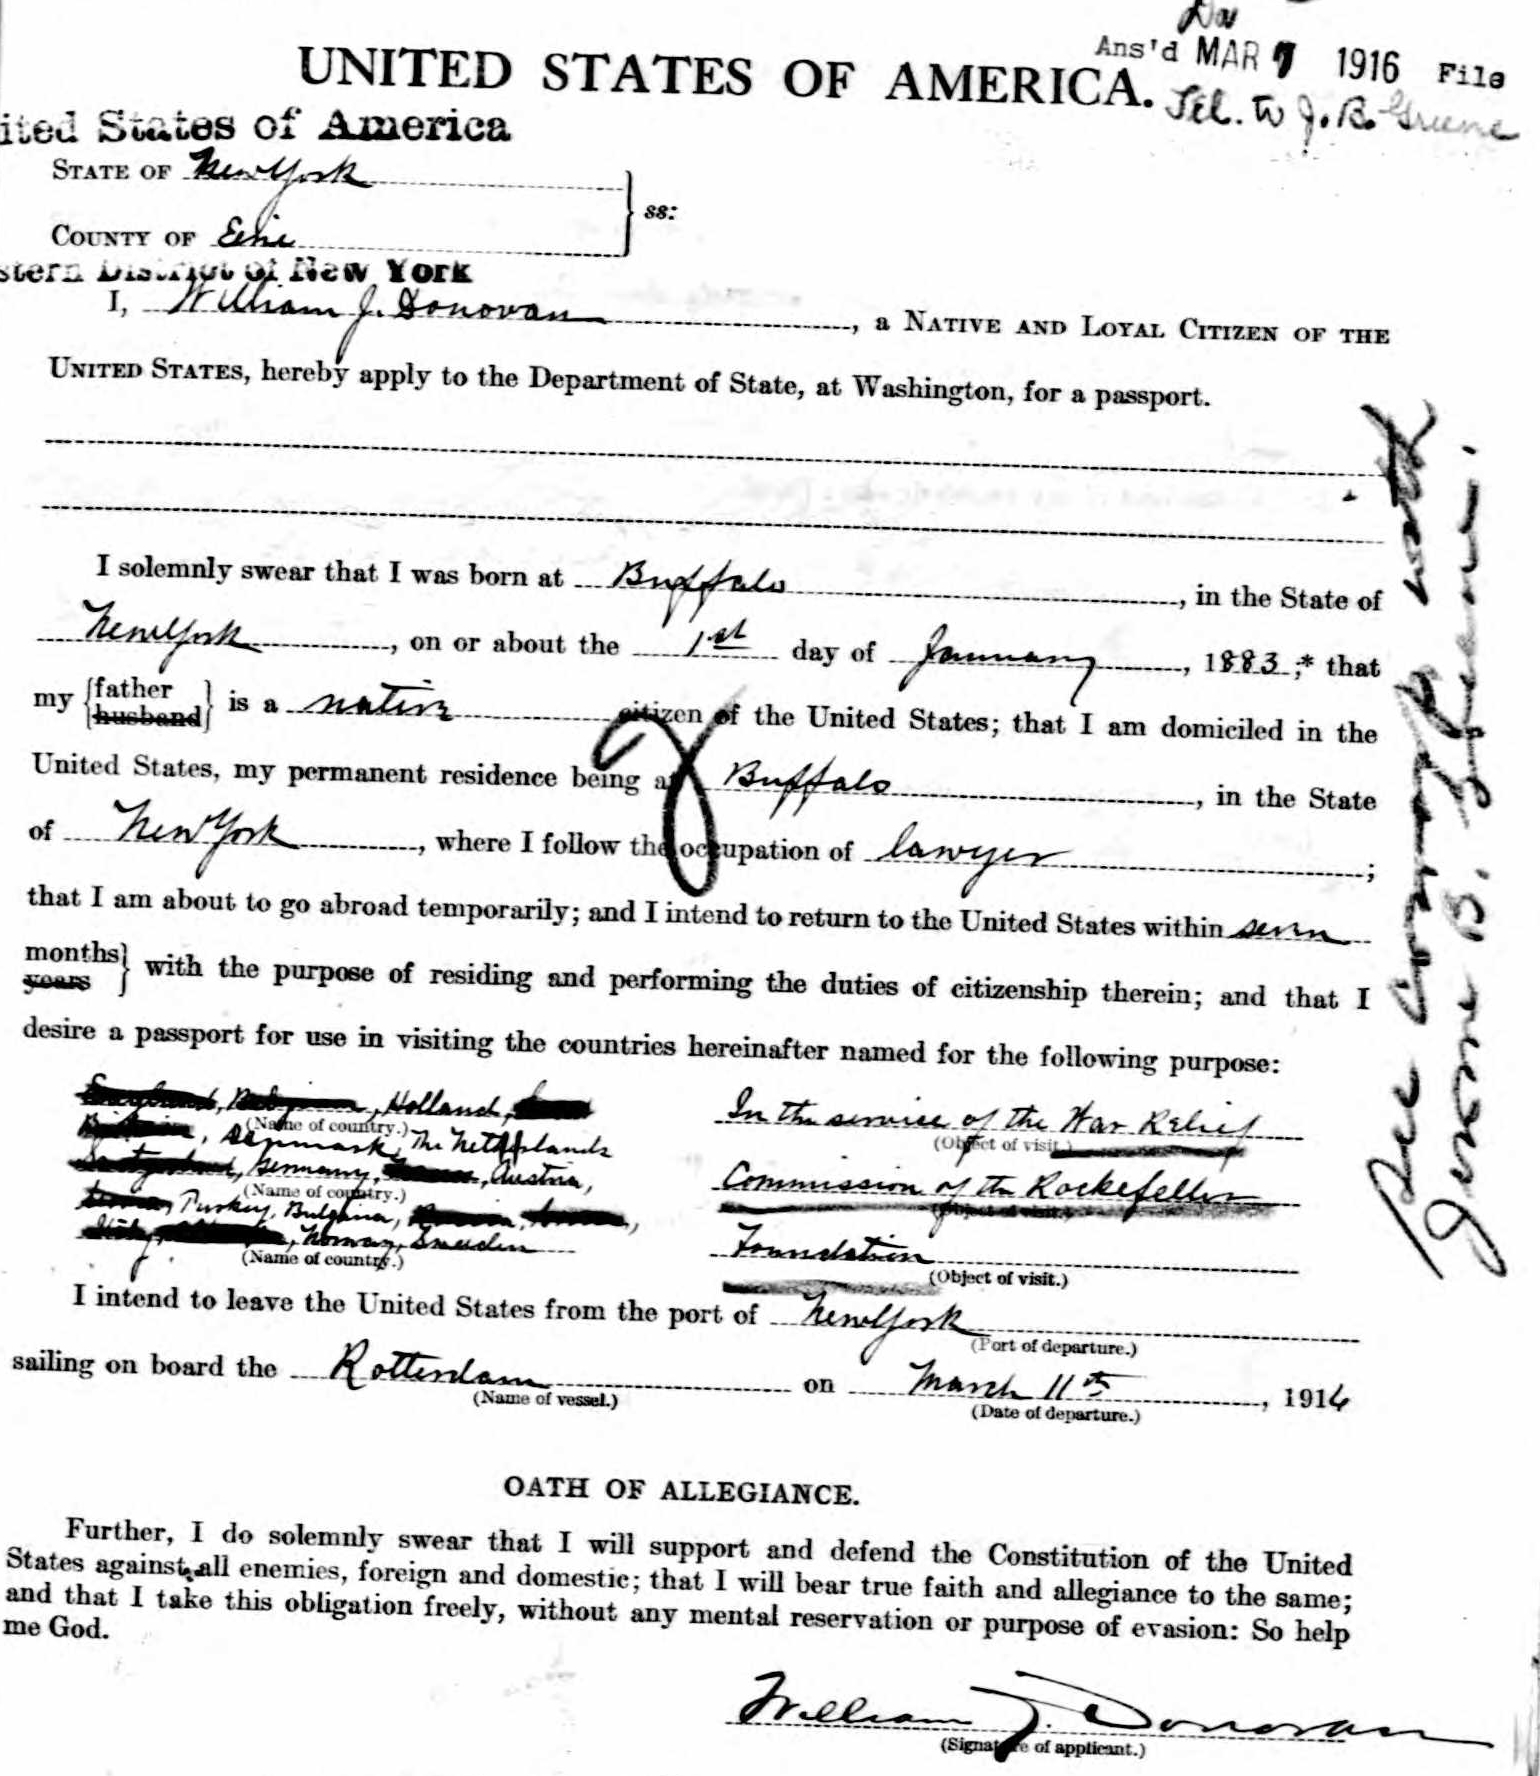 William J. Donovan. (Issured Mar. 07, 1916). U.S. Passport Application, Cert. No. 19518. National Archives, Washington, D.C.